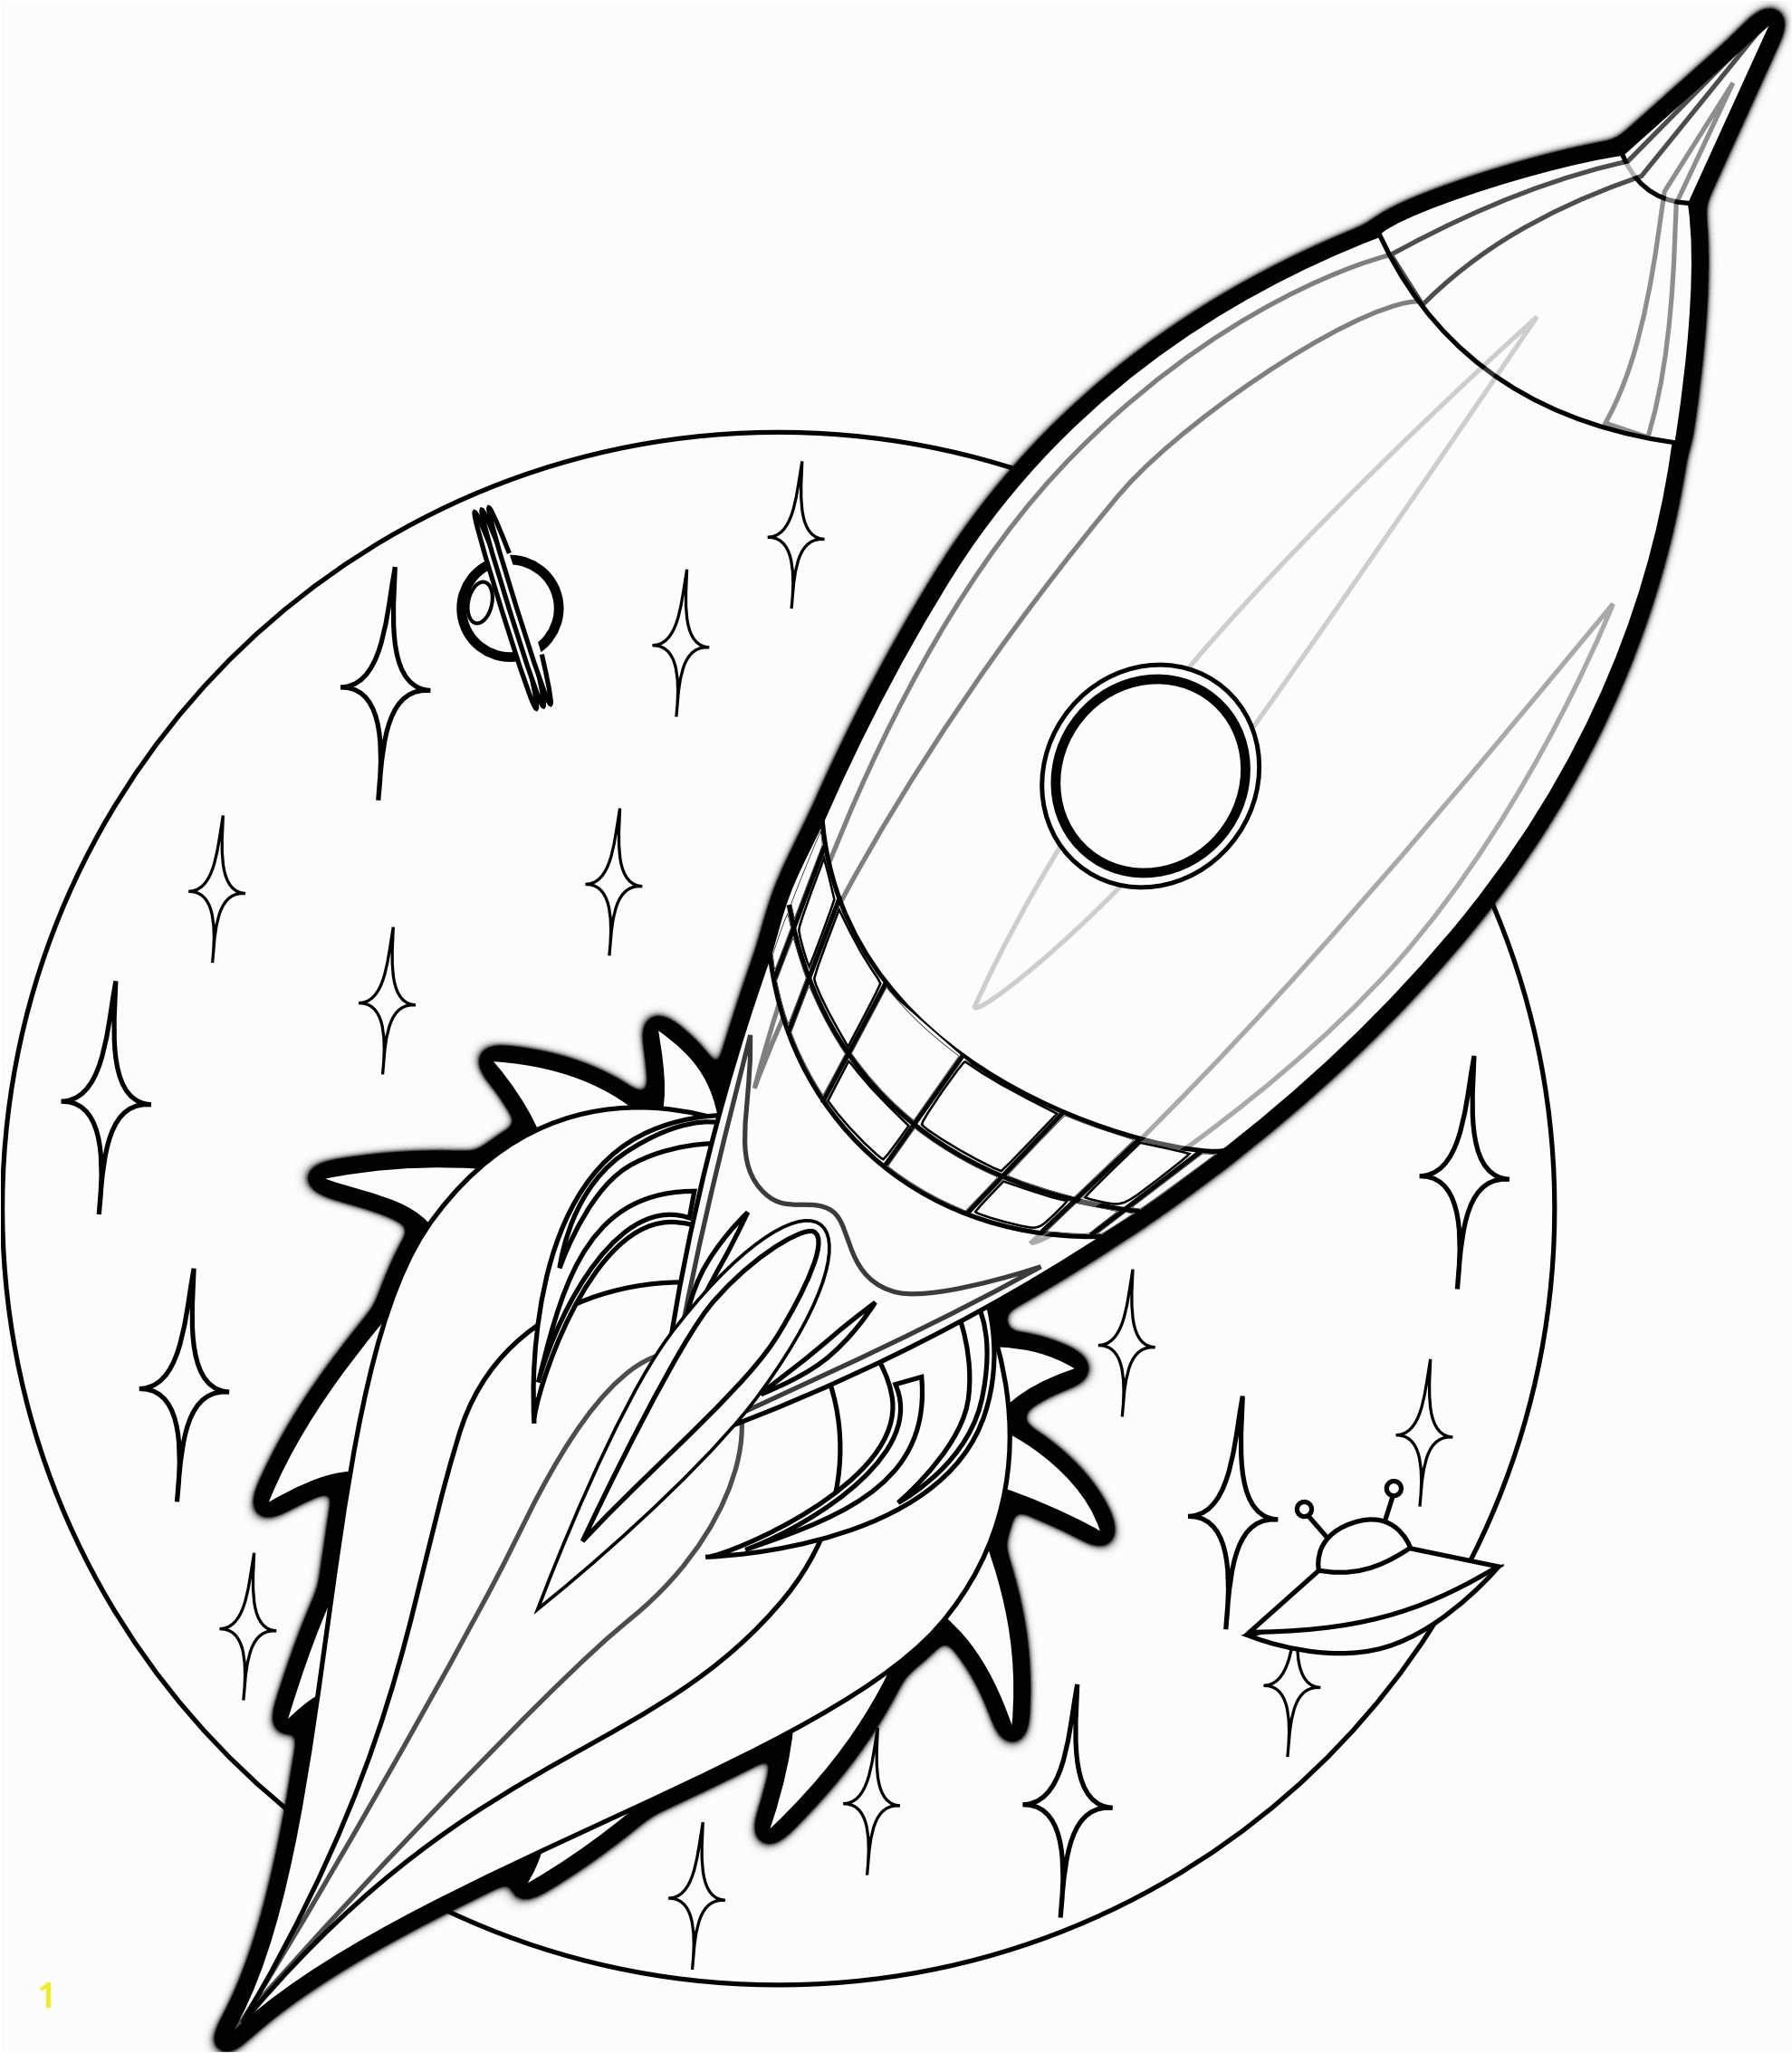 Small Rocket Ship Coloring Page Free Printable Rocket Ship Coloring Pages for Kids